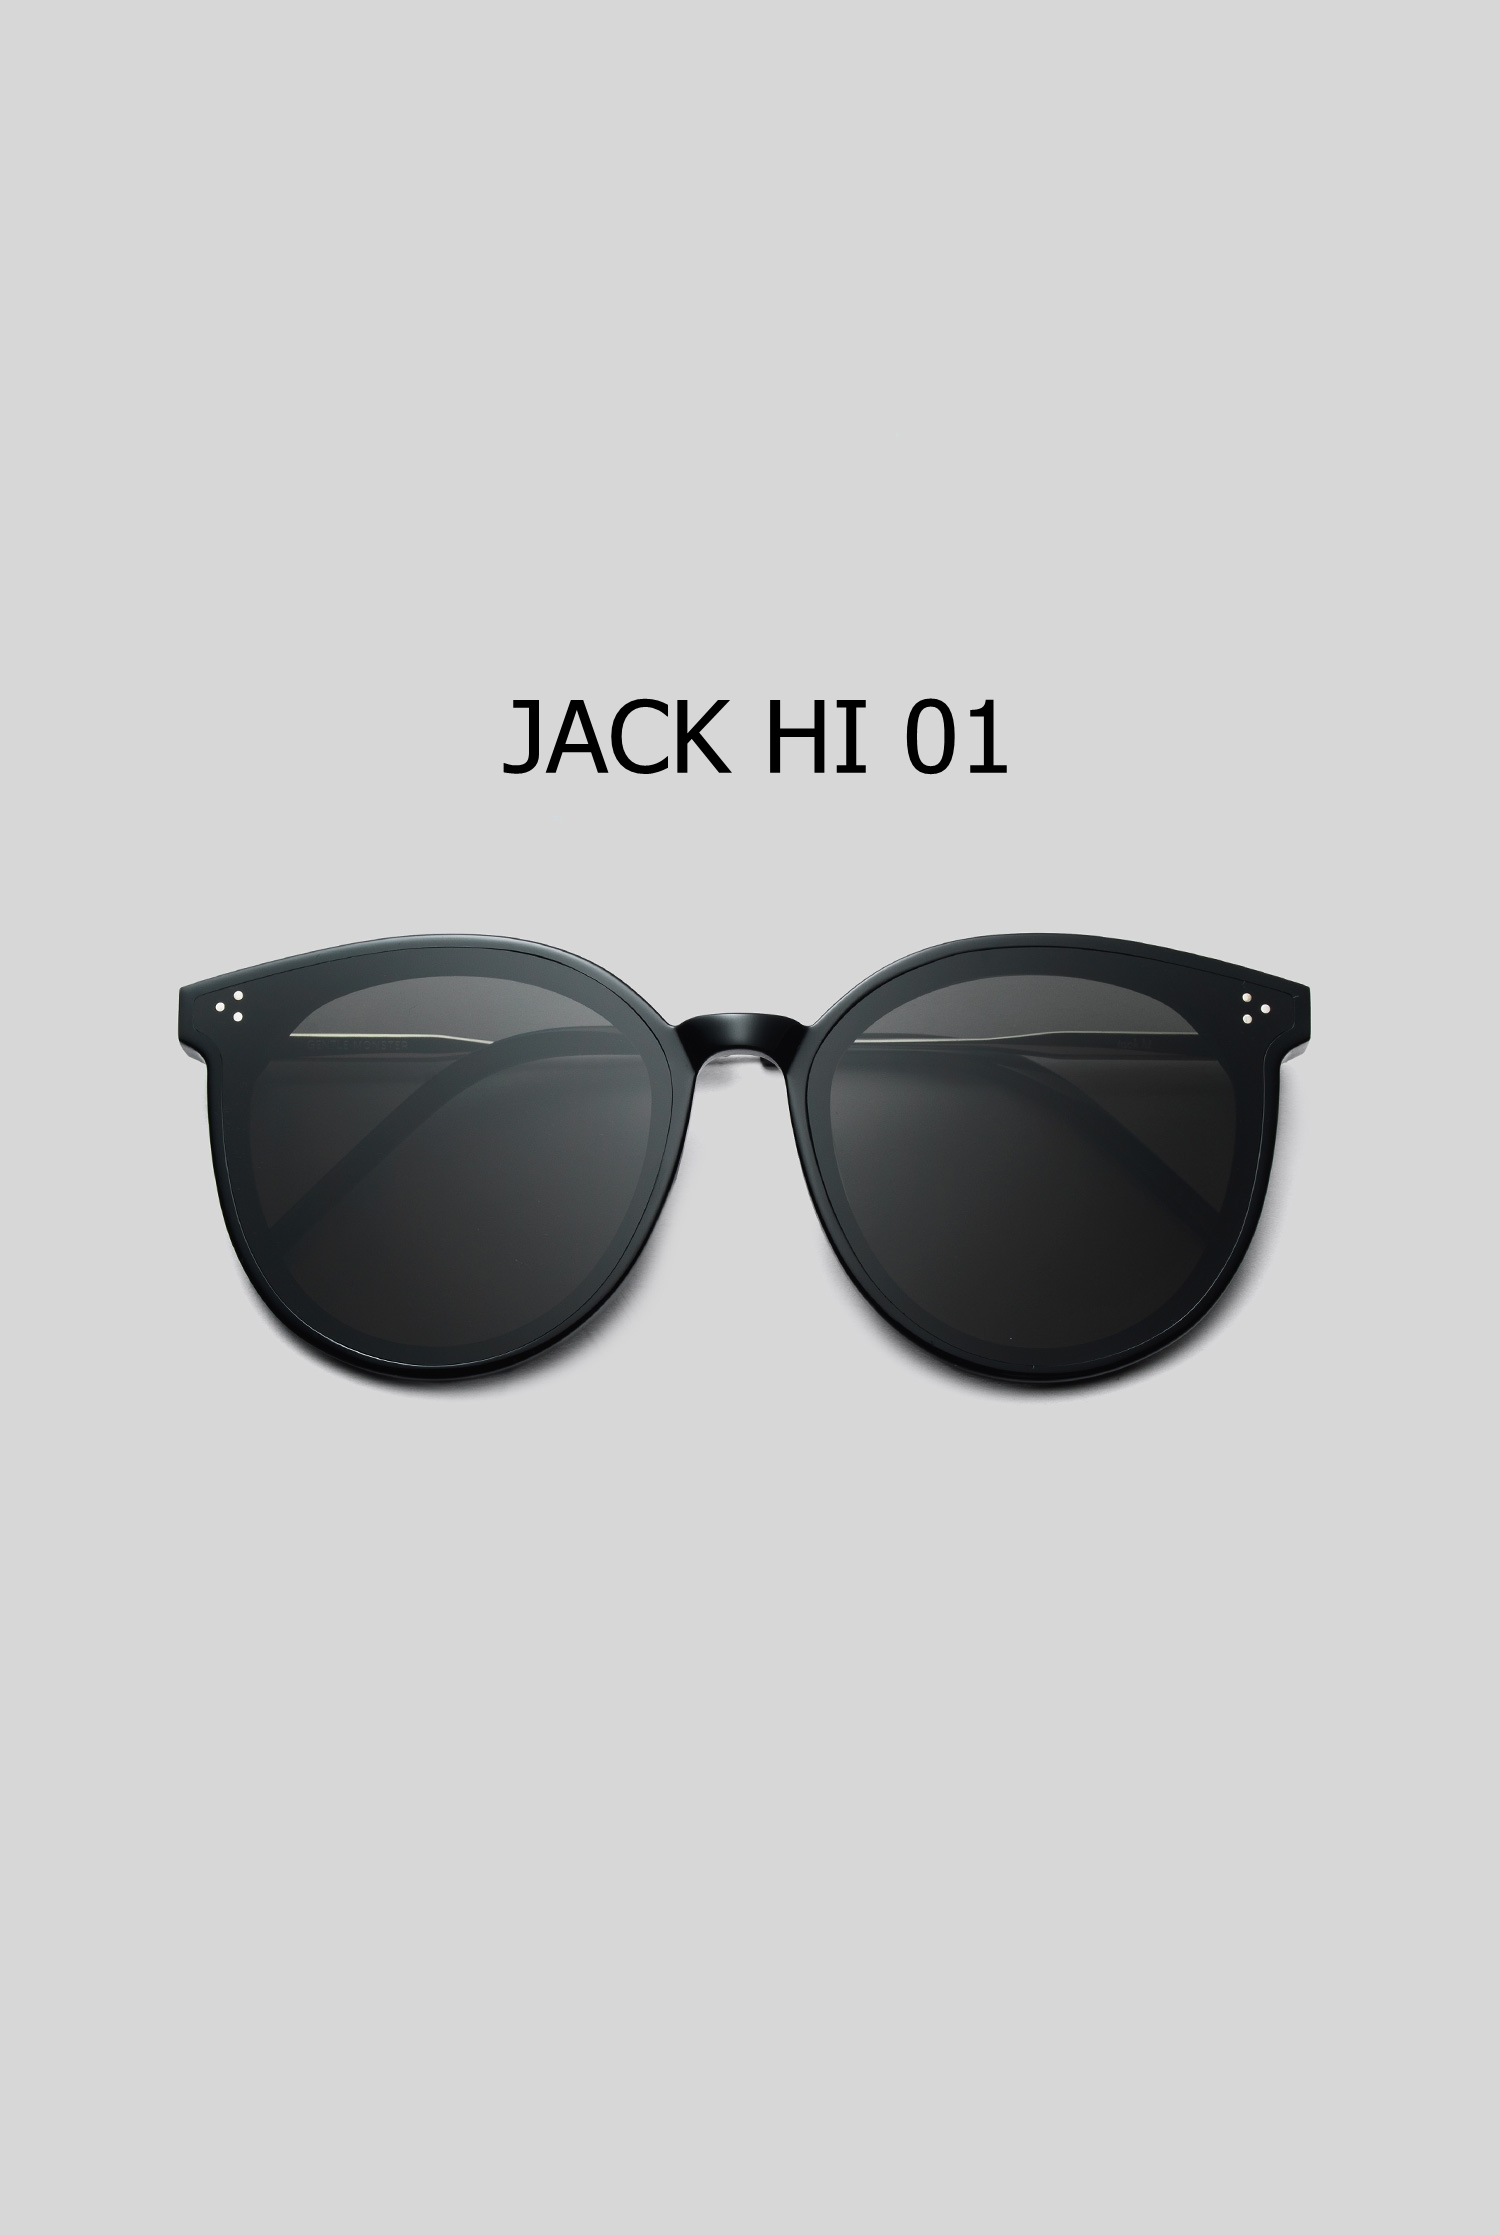 JACK HI 01 